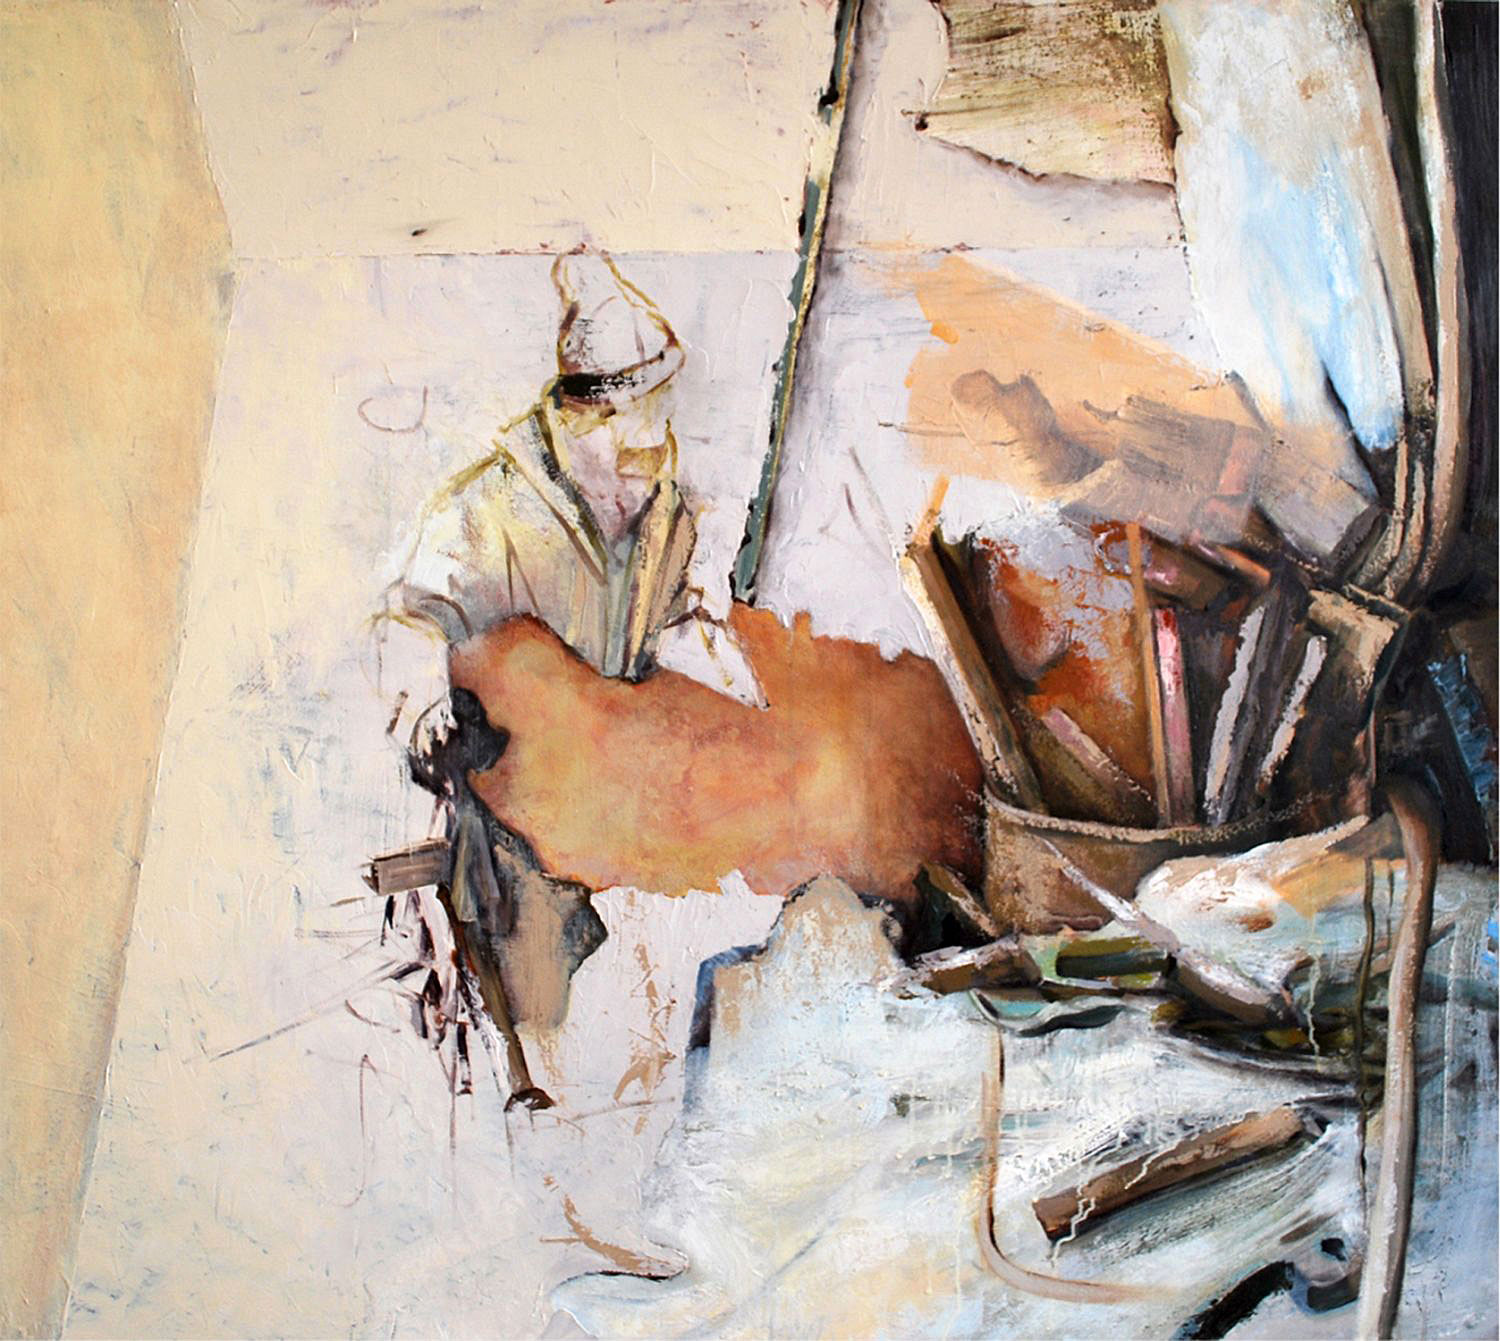 Nicholas Scrimenti, Burn Barrel, 2012. Oil and acrylic on panel, 43 x 48 in.